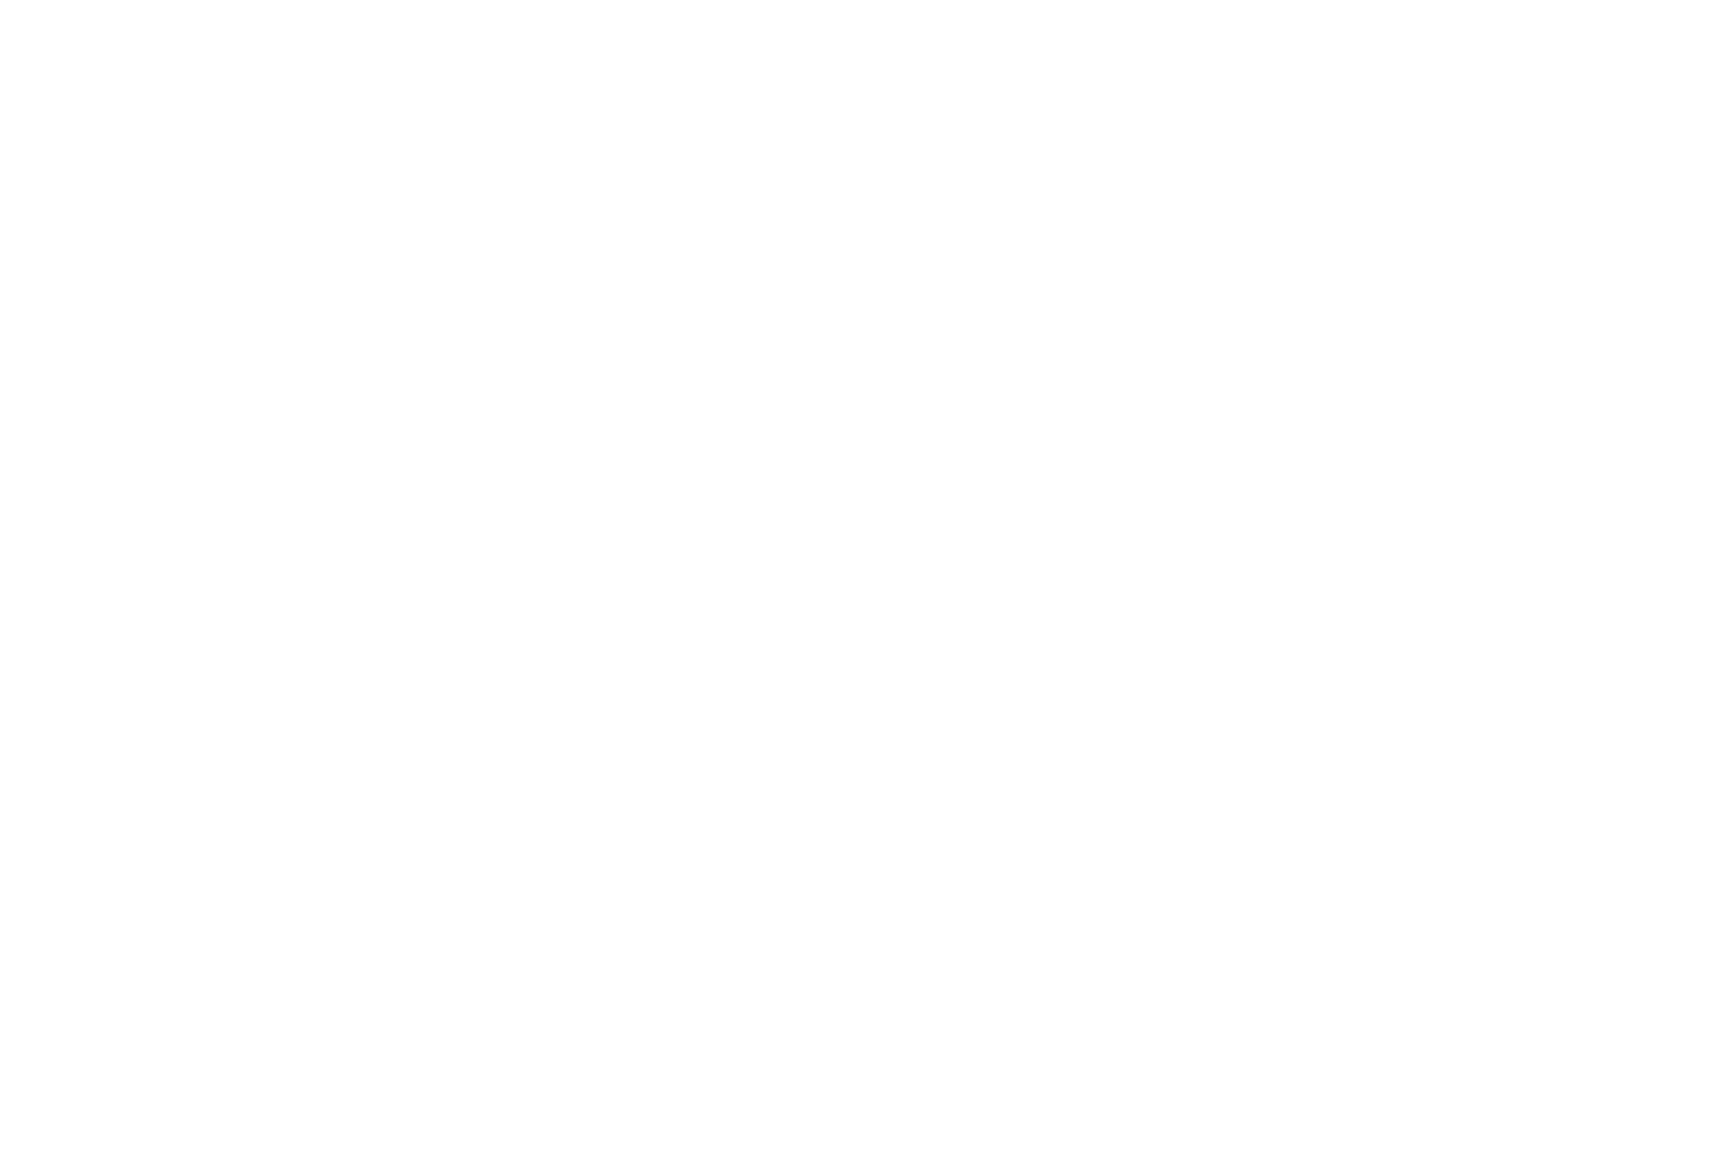 BEST DIRECTOR - CINEVILLE CALCUTTA GLOBAL CINEFEST - 2020